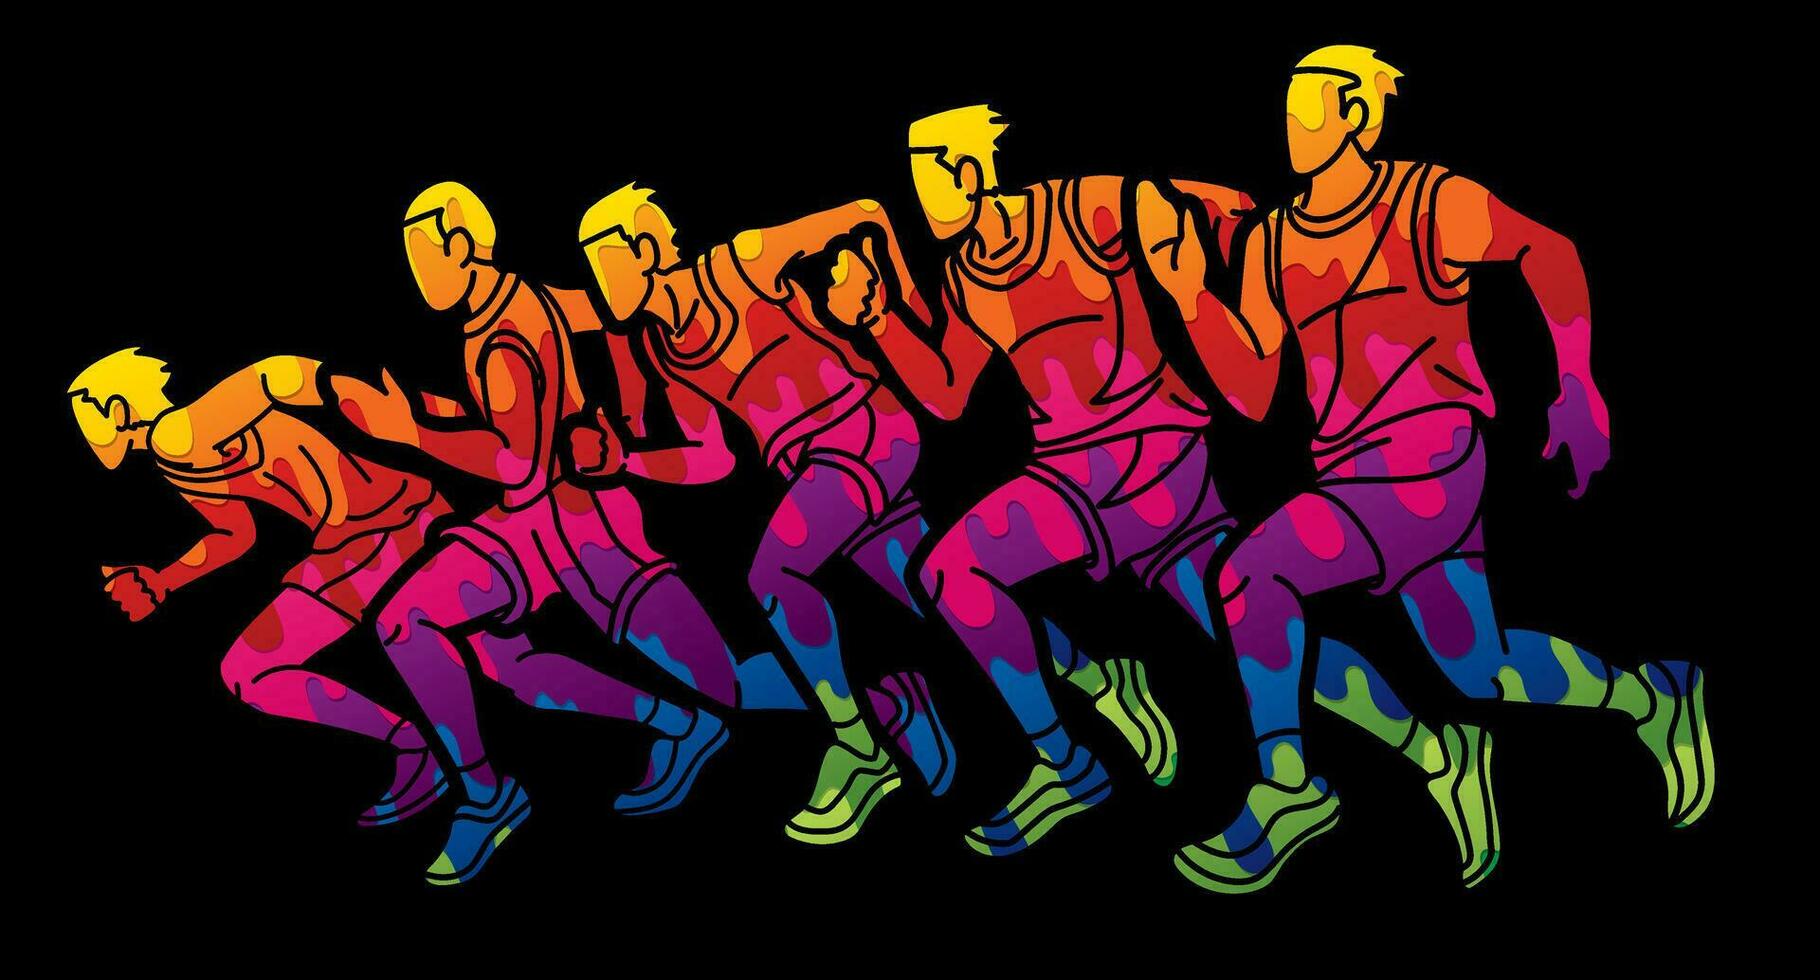 grupo de corredor acción comienzo corriendo hombres correr juntos pintada vector